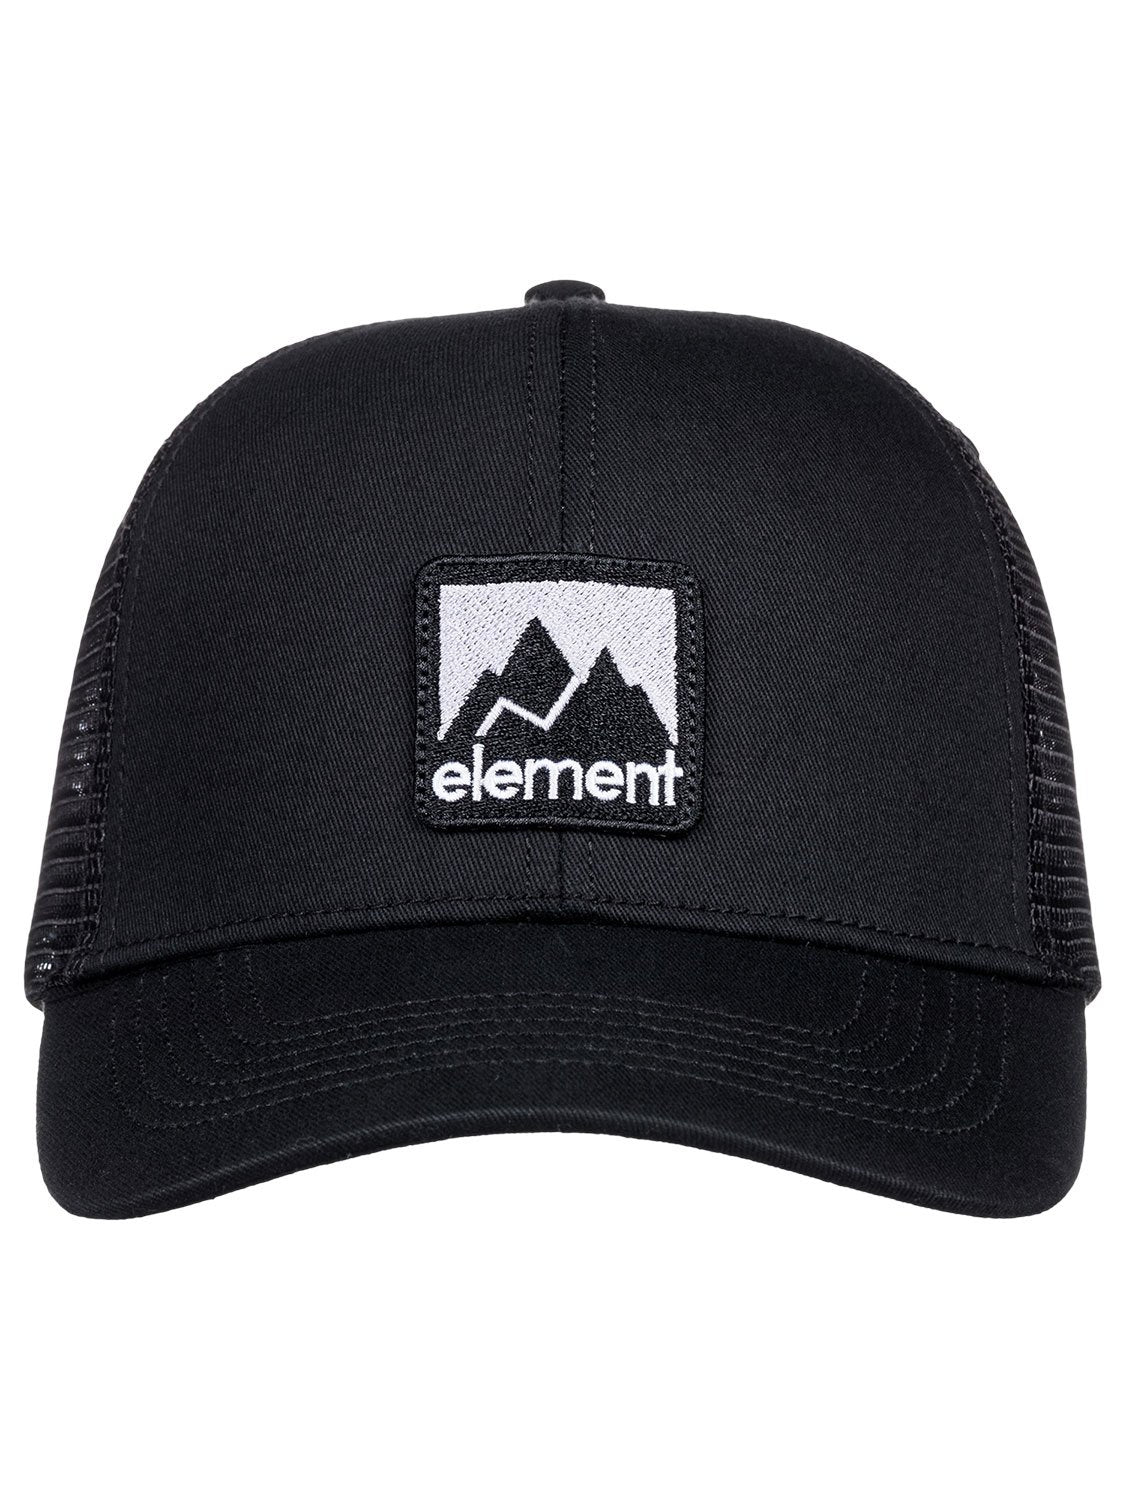 Element Men's Joint 2.0 Mesh Cap